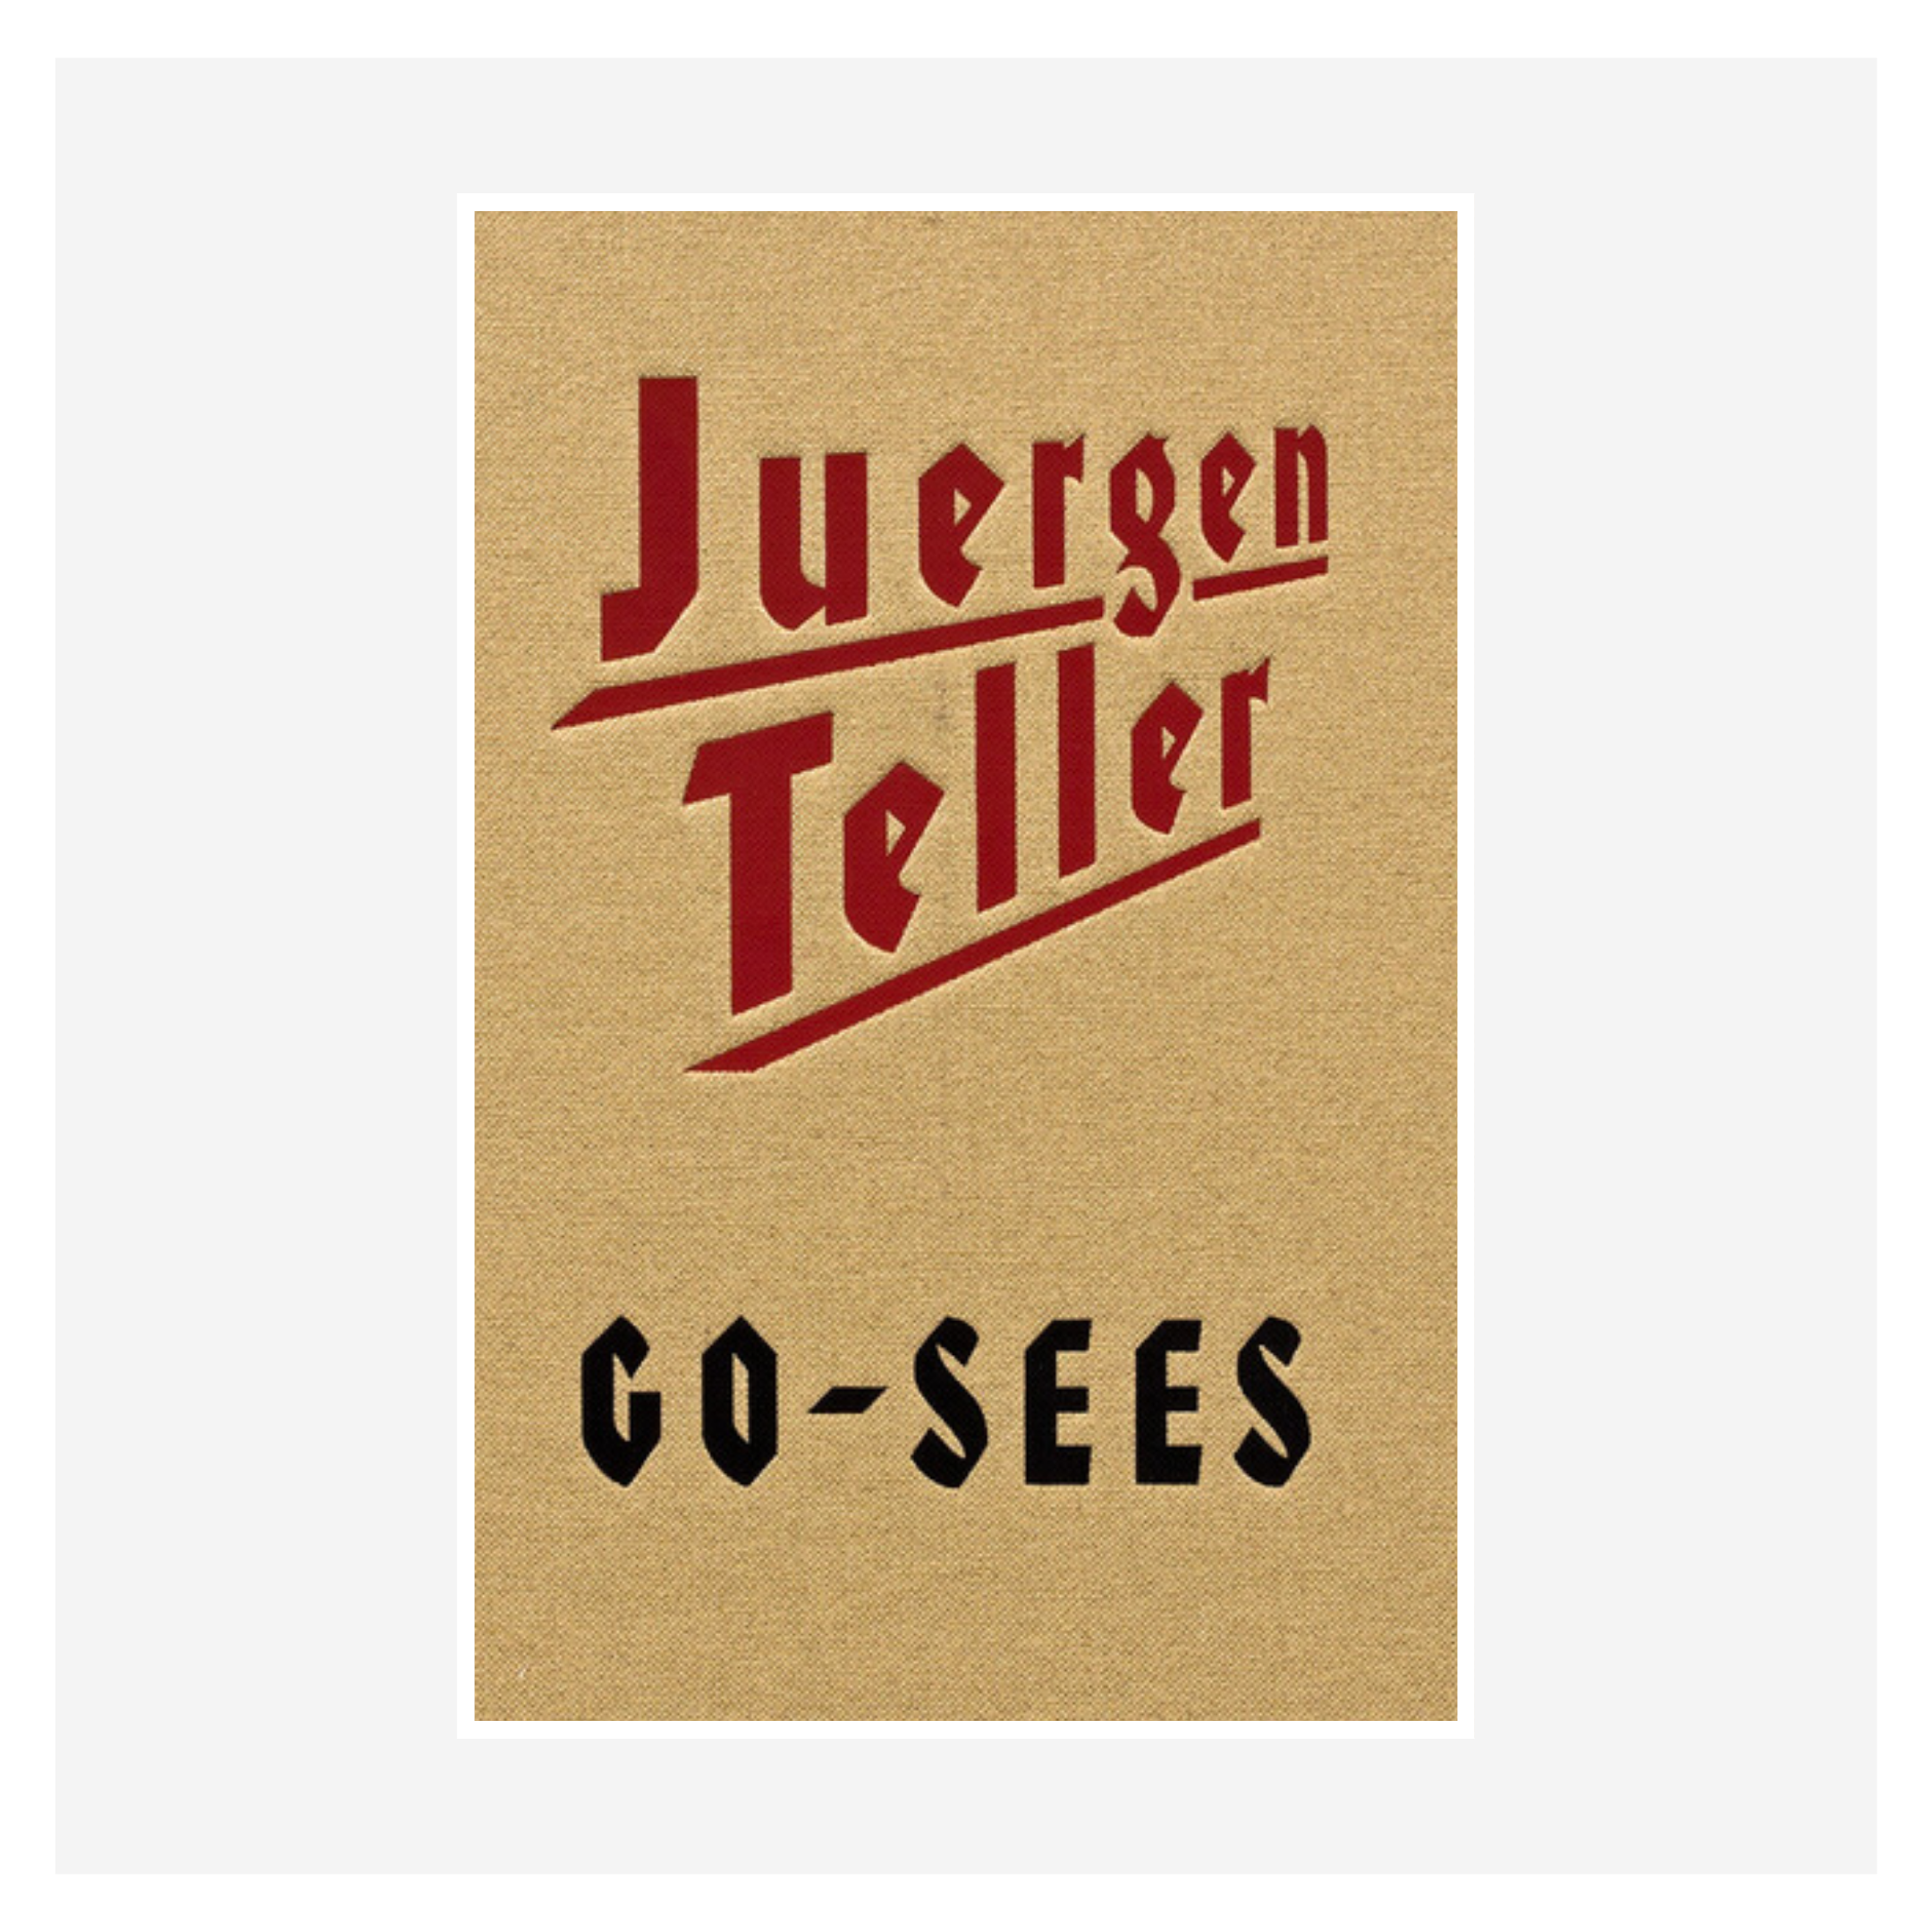 “Go-Sees” by Juergen Teller